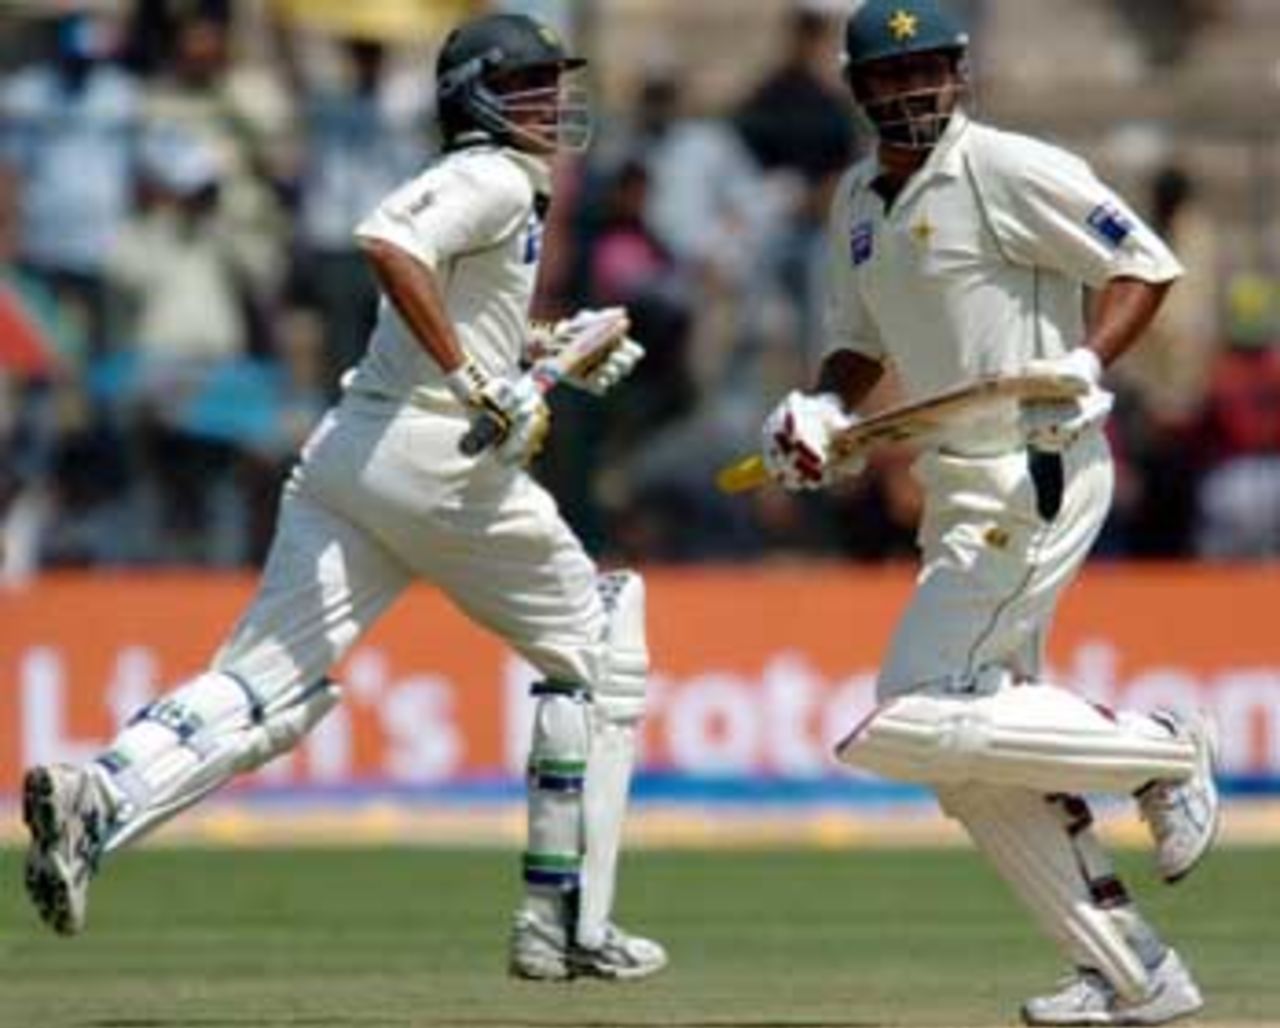 Inzamam-ul-Haq and Younis Khan ran India ragged with an unbeaten 316-run partnership, India v Pakistan, 3rd Test, Bangalore, 1st day, March 24, 2005